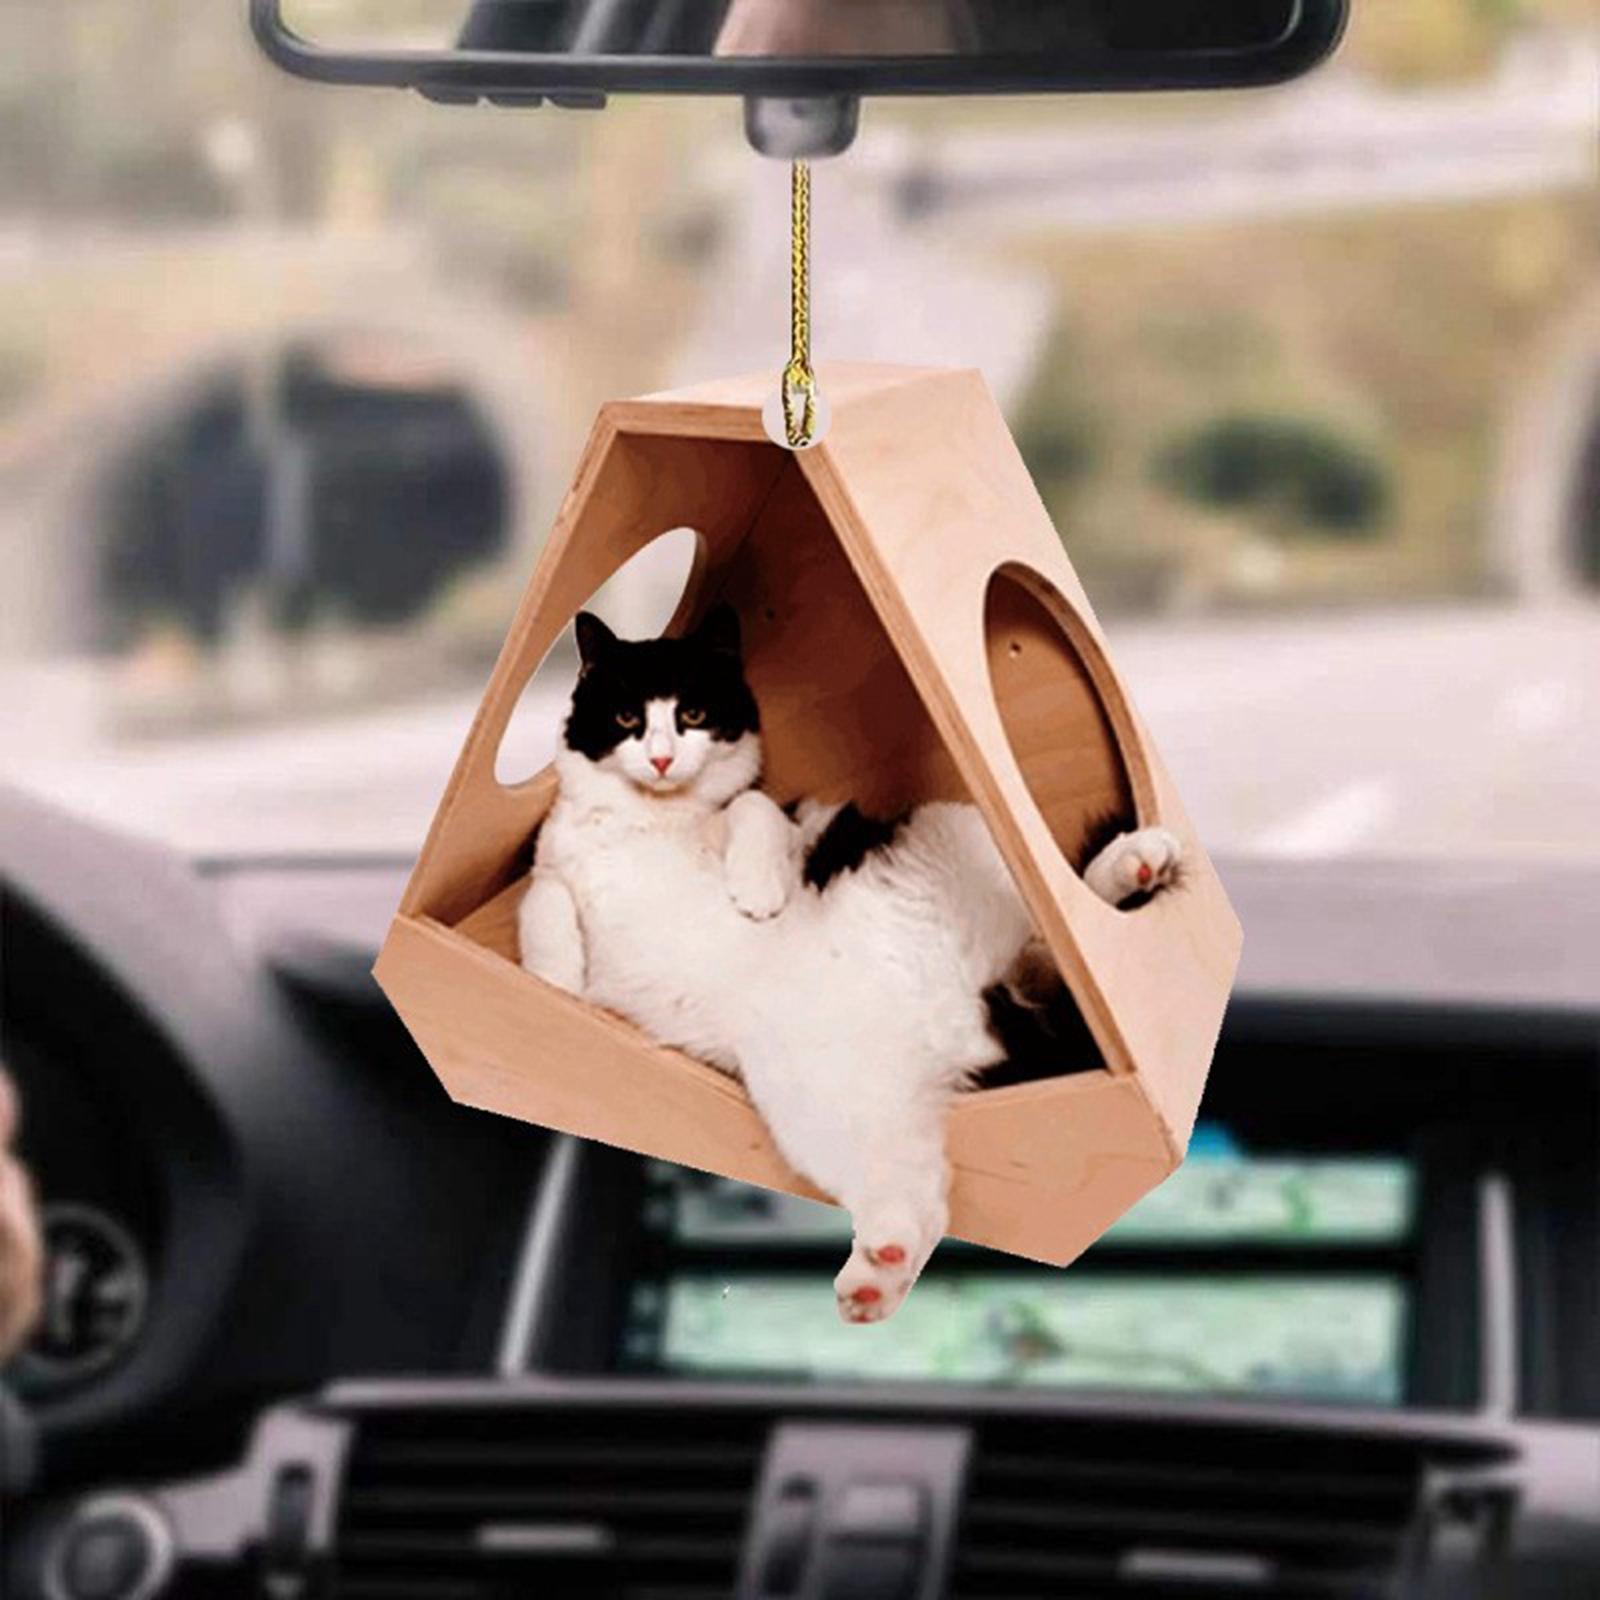 Car Pendant Funny Cat Figurine Decor Accessory for Table Windows Doors 2pcs